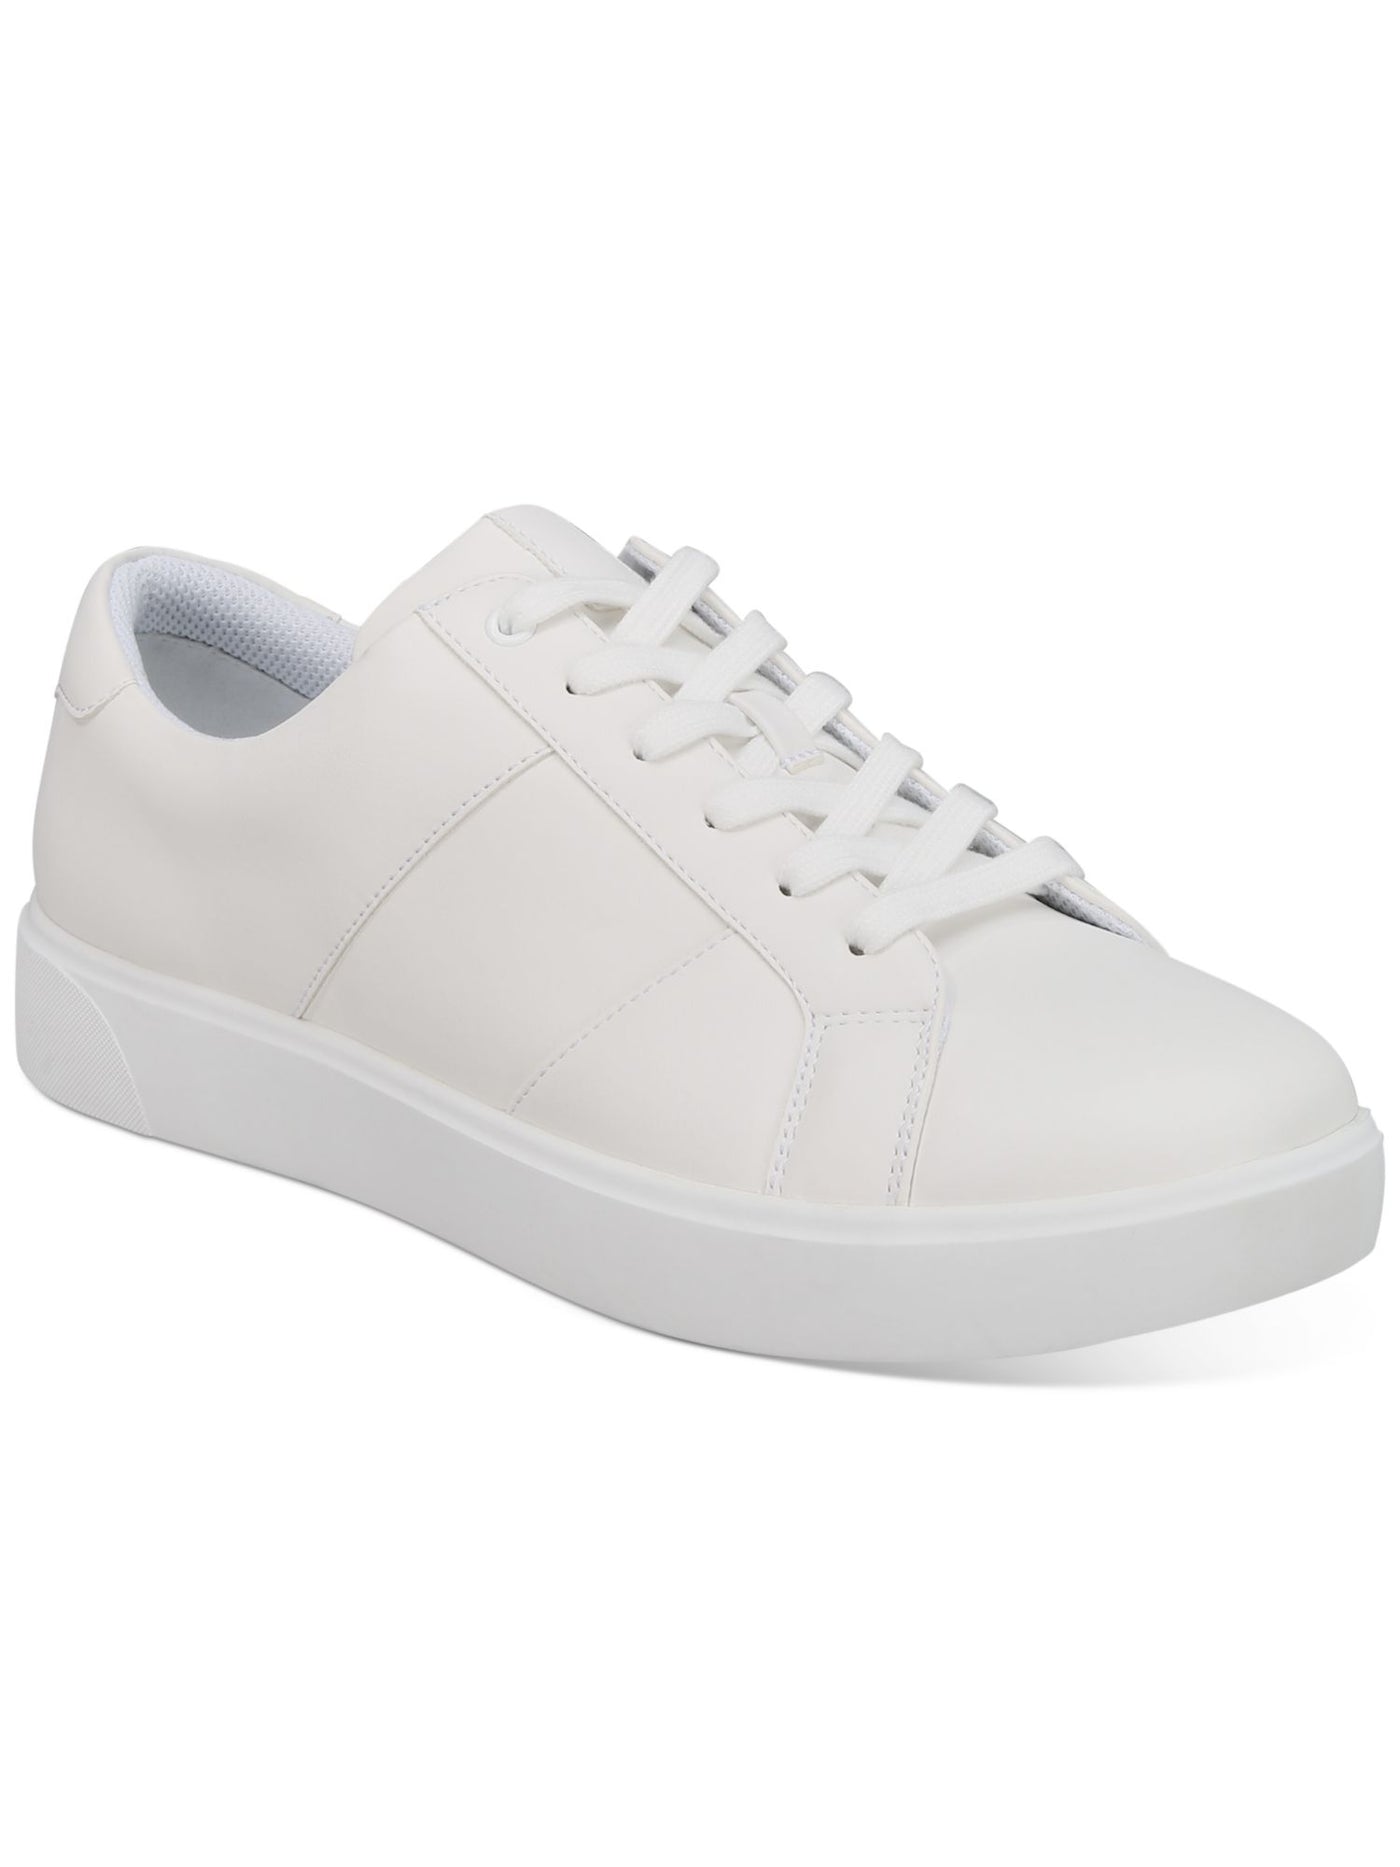 INC Mens White Comfort Ezra Round Toe Platform Lace-Up Athletic Sneakers Shoes 10 M